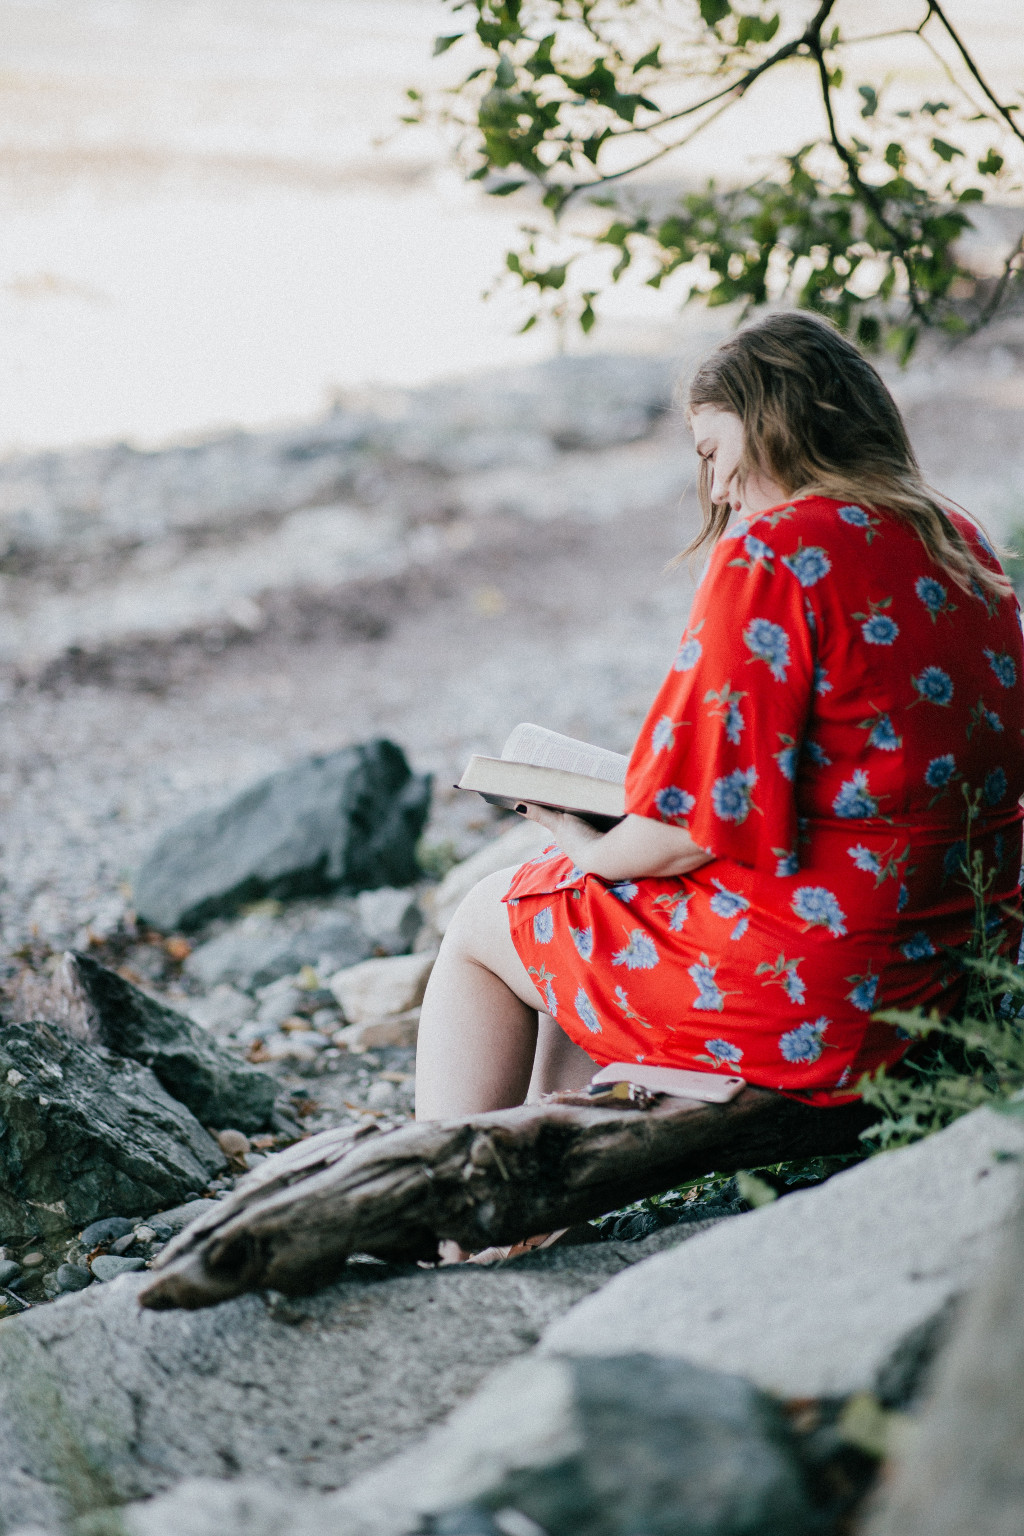 Frau mit rotem Kleid liest